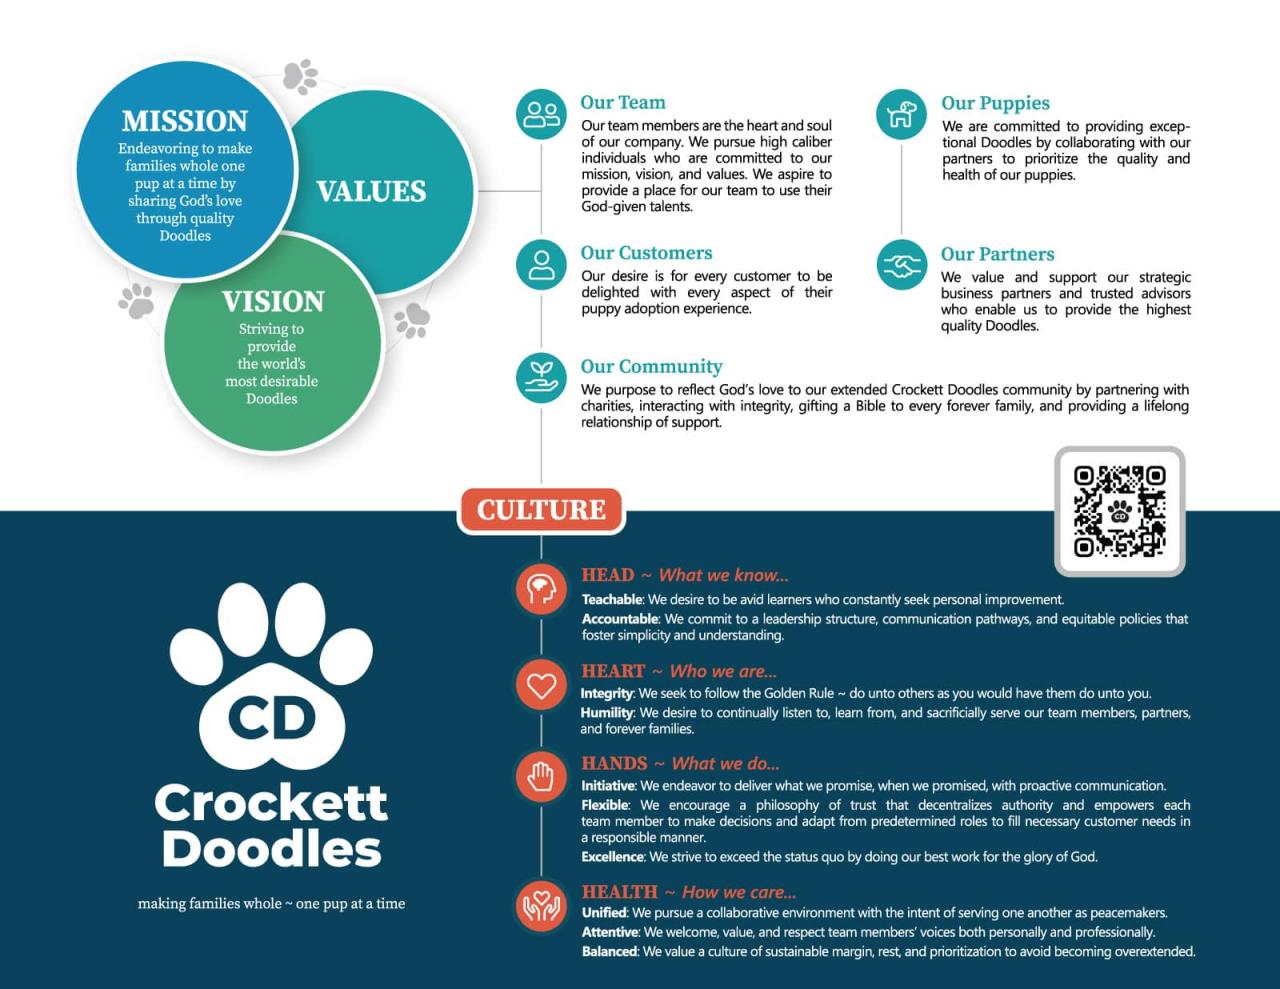 Crockett Doodles' Mission, Vision, and Values